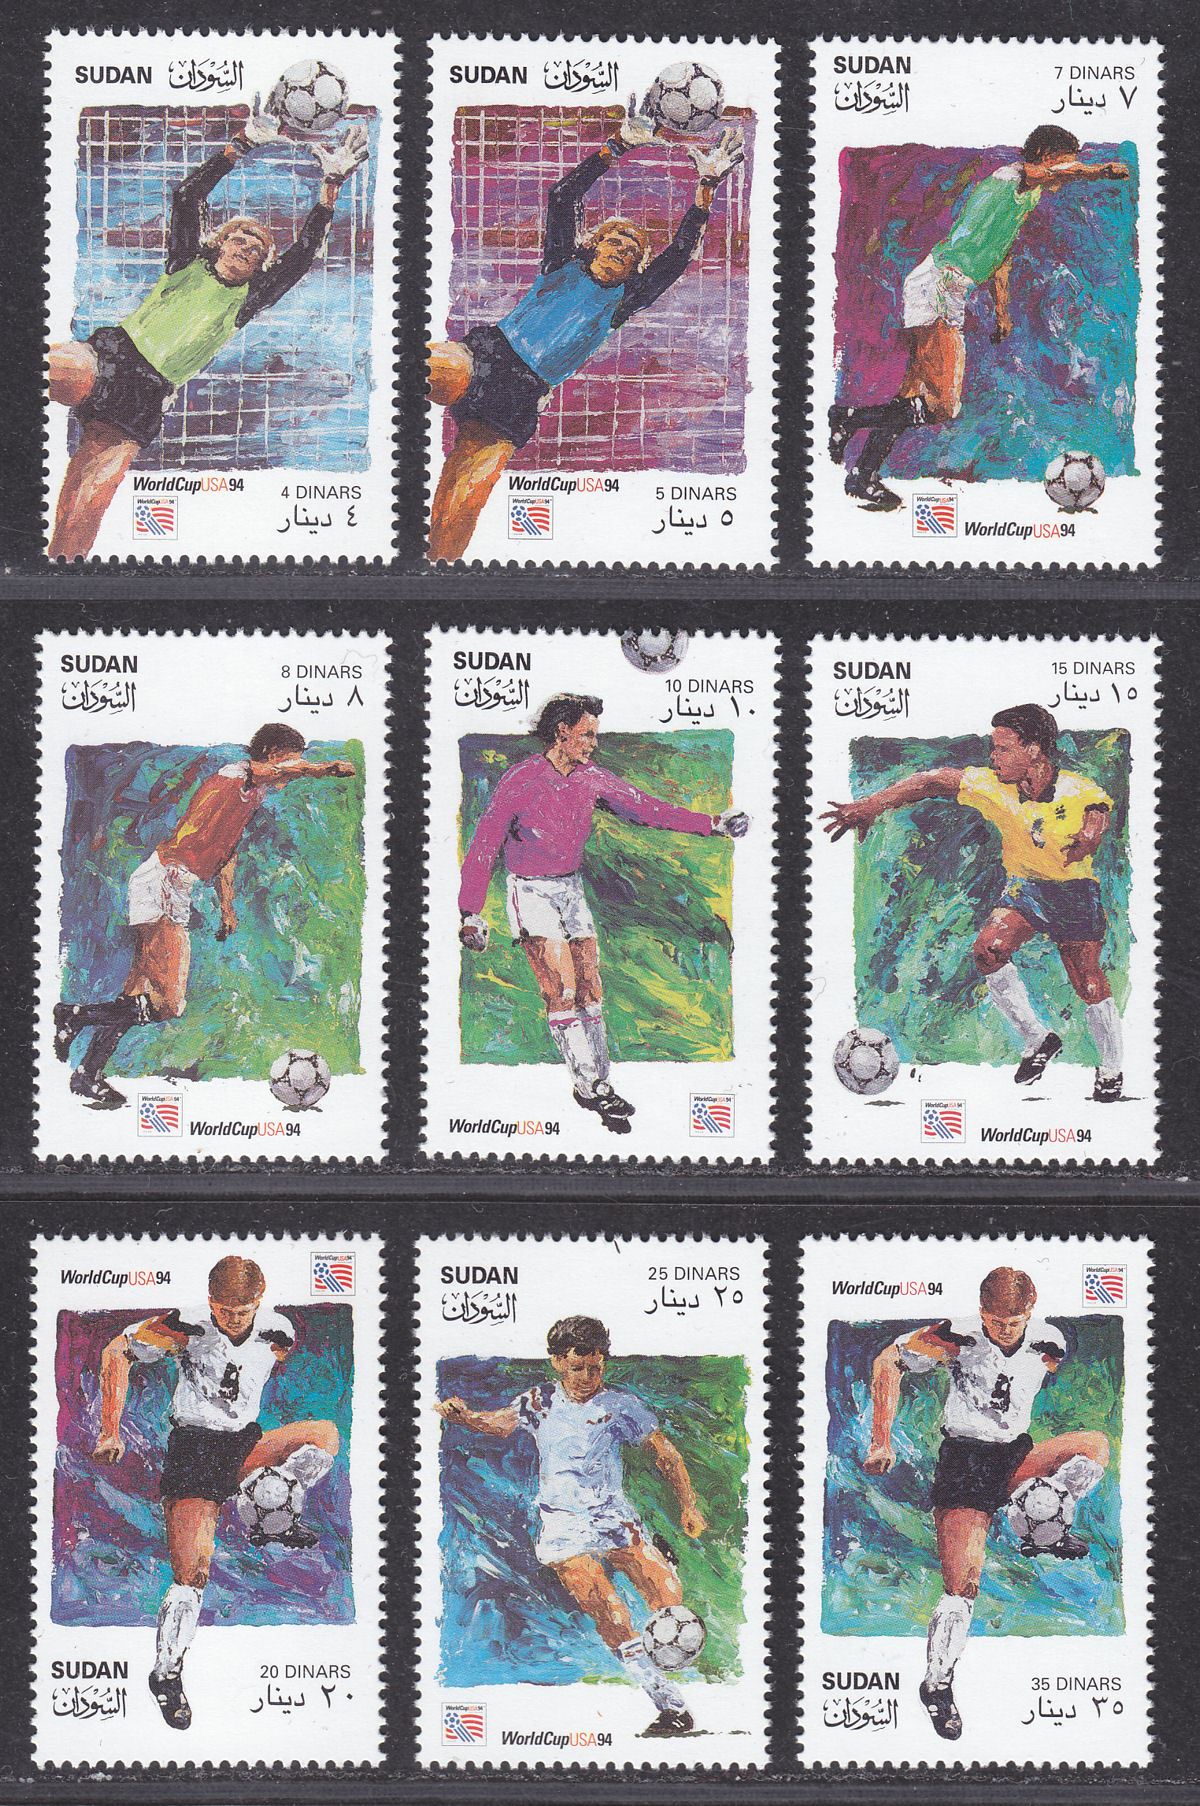 Sudan 1995 World Cup Football USA 94 Set + MS Mint SG534-MS543 cat £35 MNH